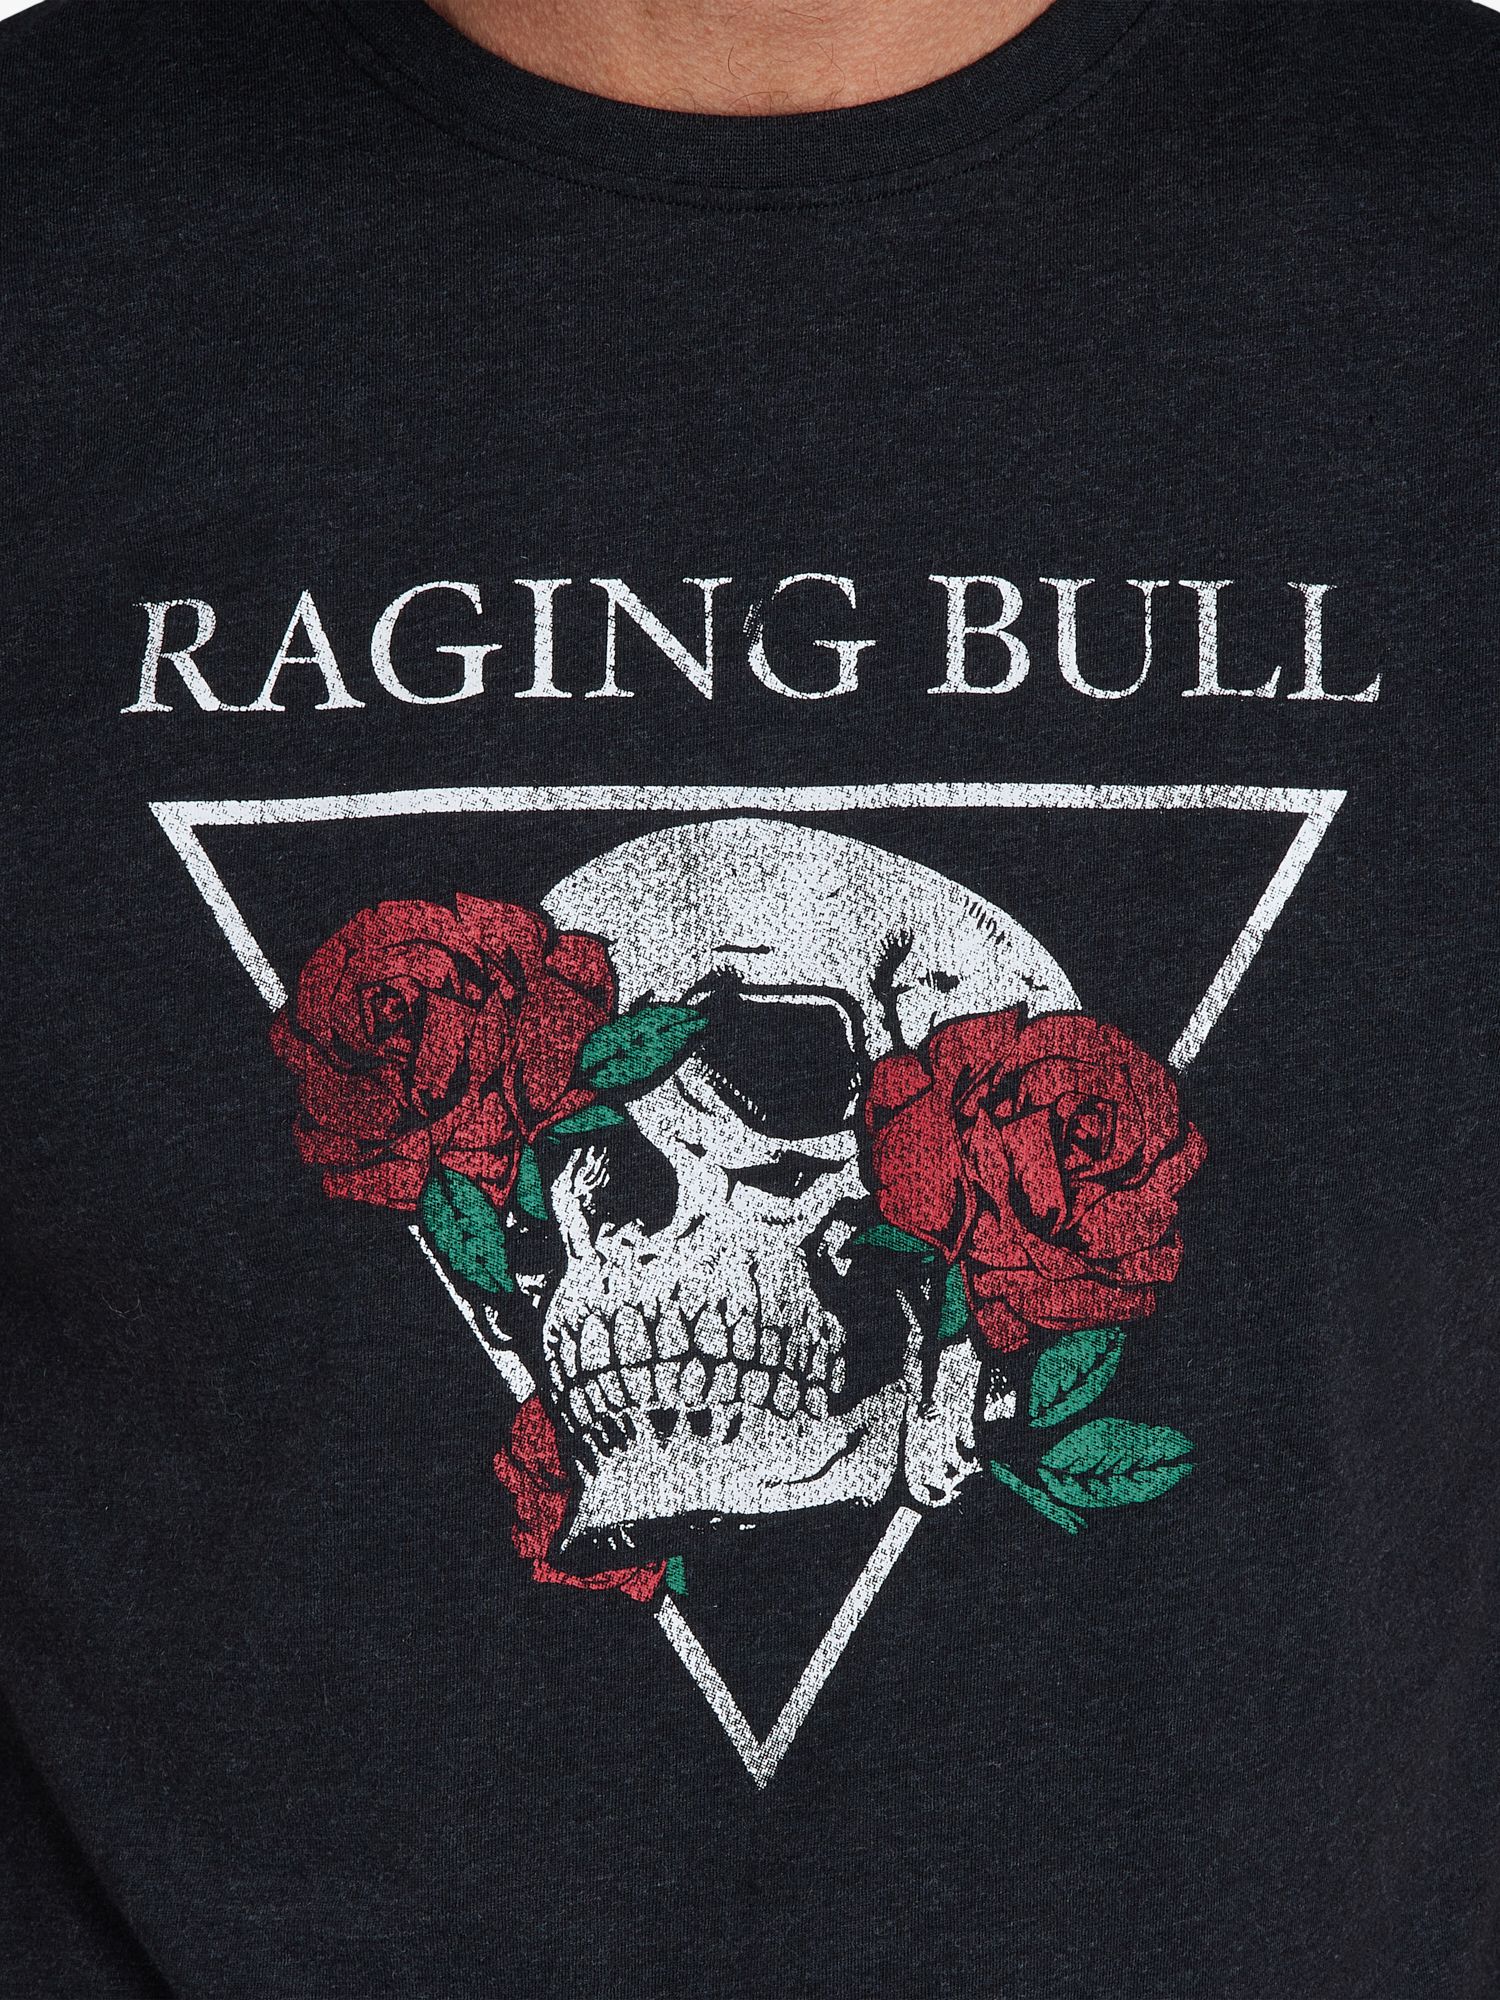 Raging Bull Rose Skull T-Shirt, Black, XXL